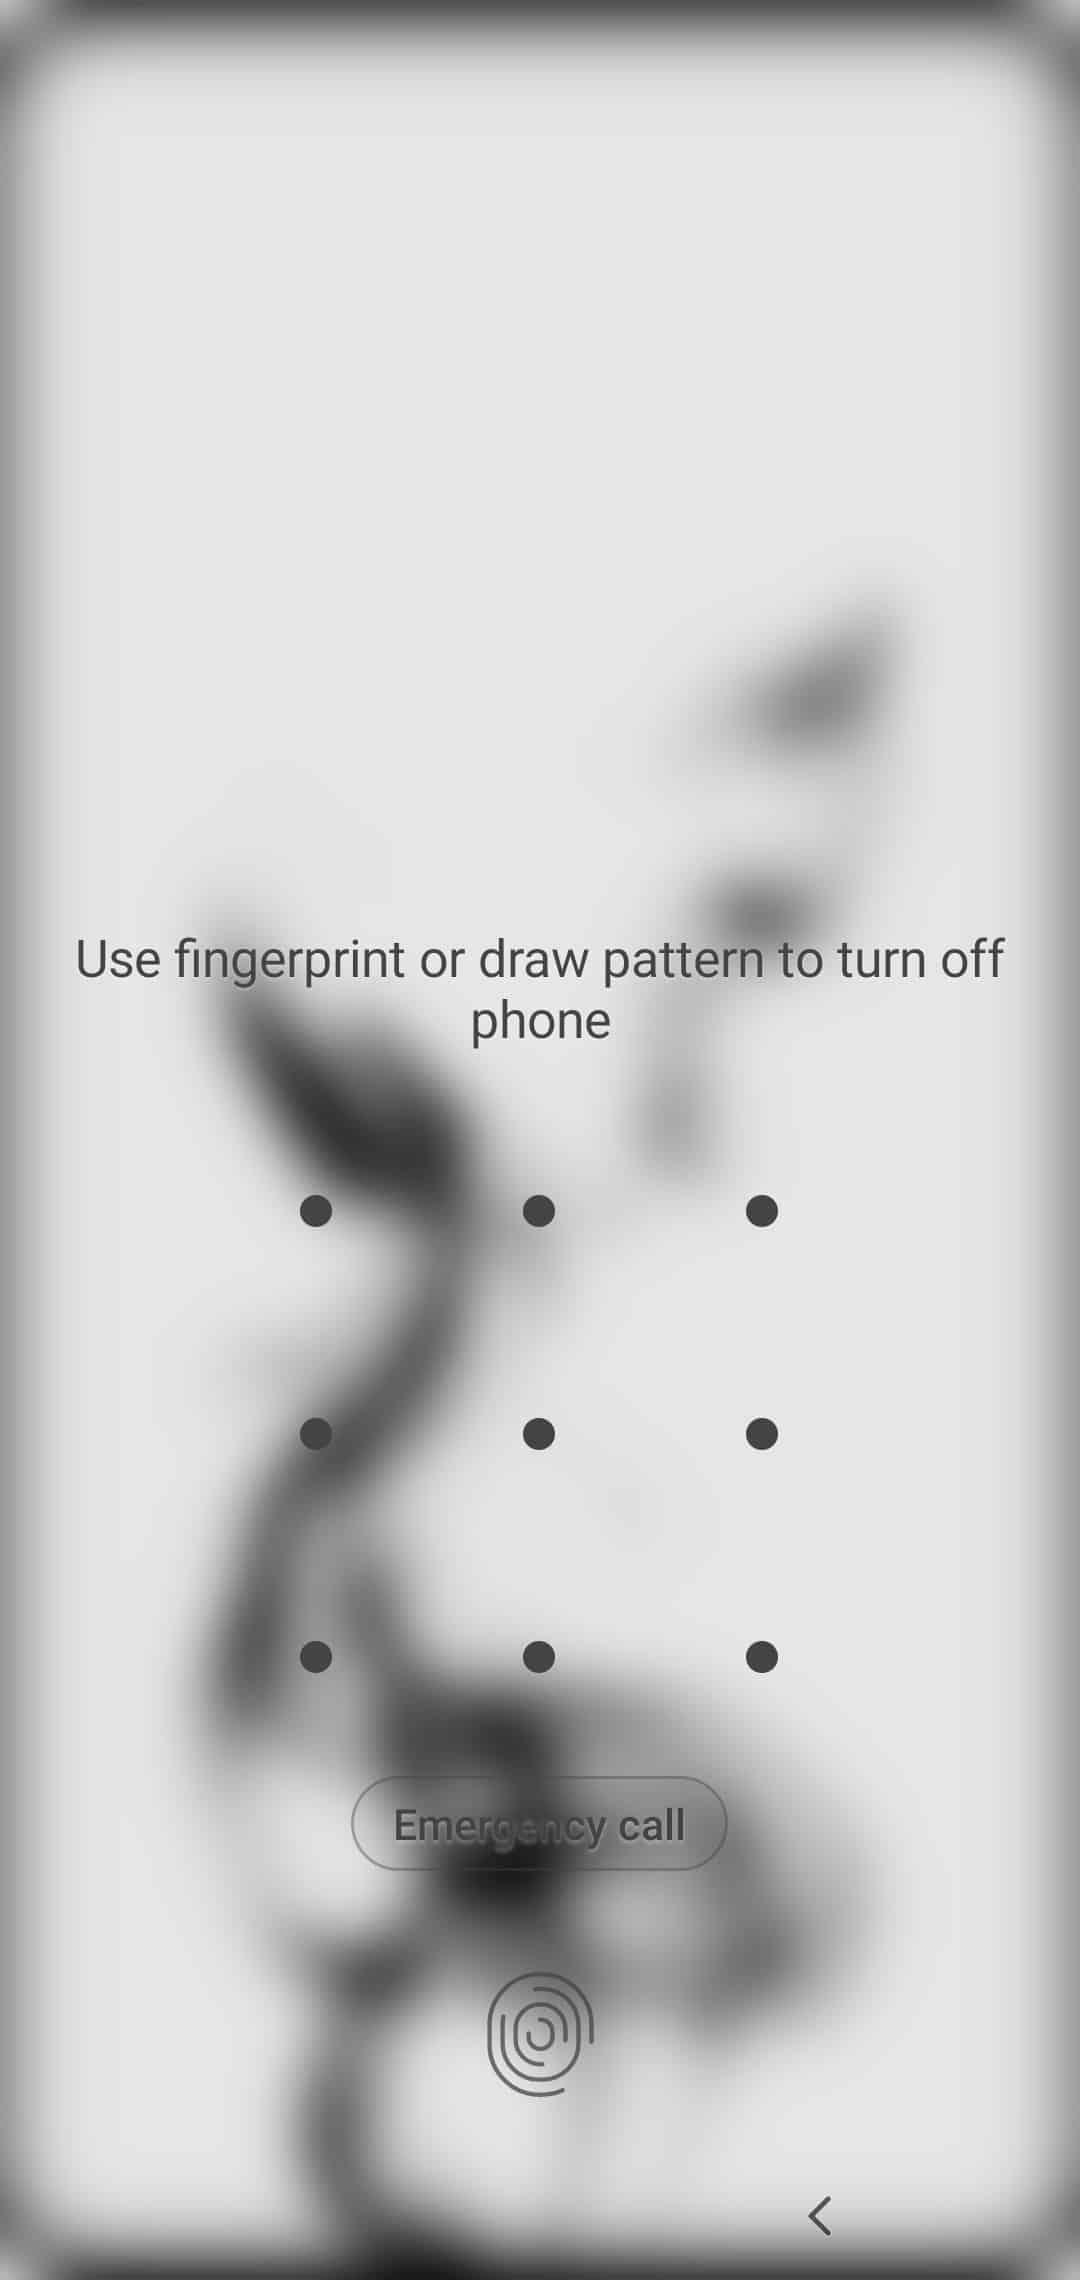 input screen unlock pattern or fingerprint